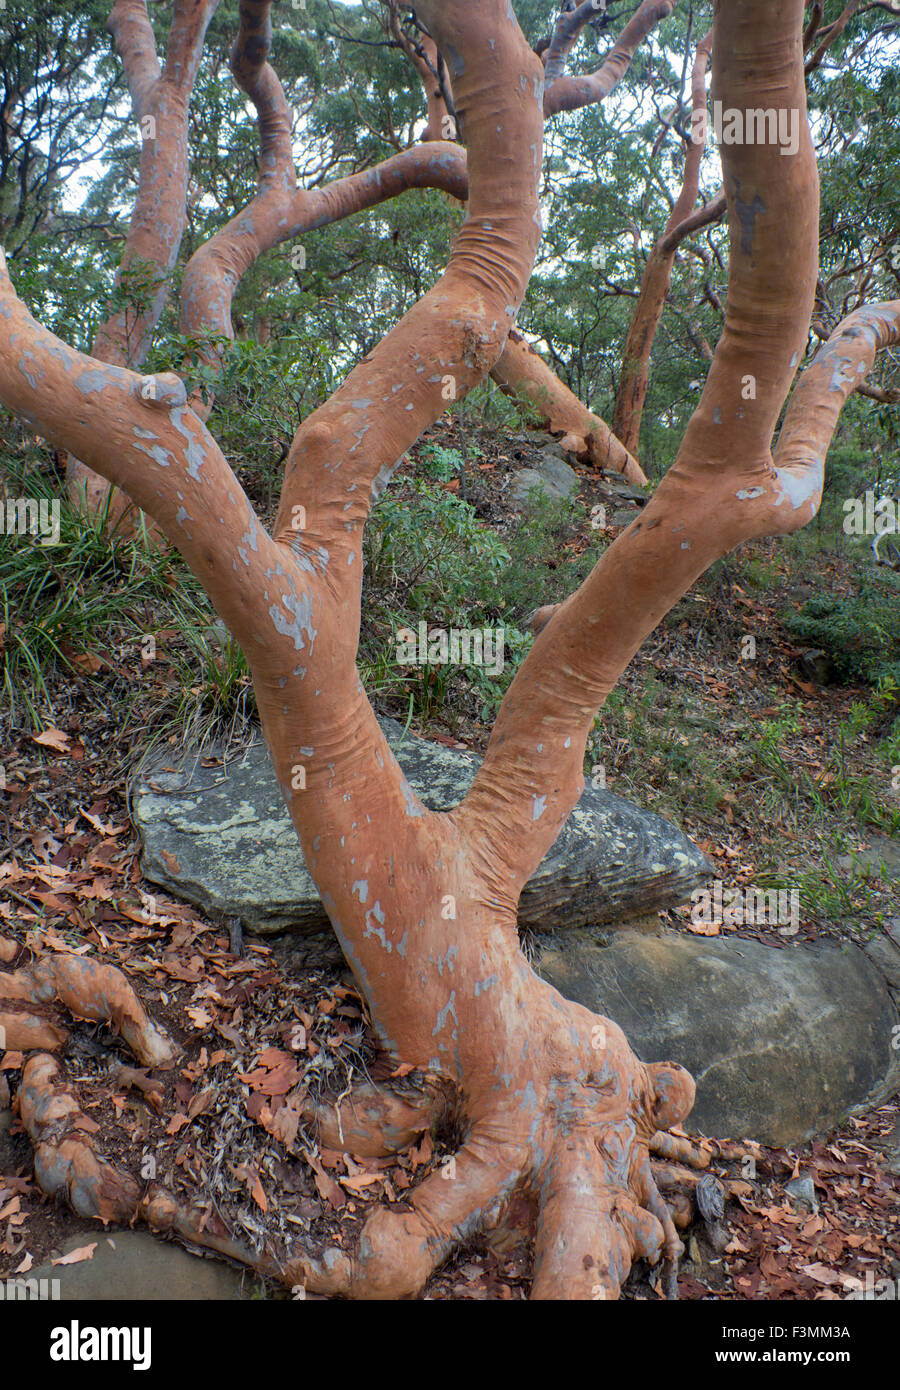 Sydney gomma rossa tree di eucalipti eucalipto Angoraphora costata NSW Australia Foto Stock